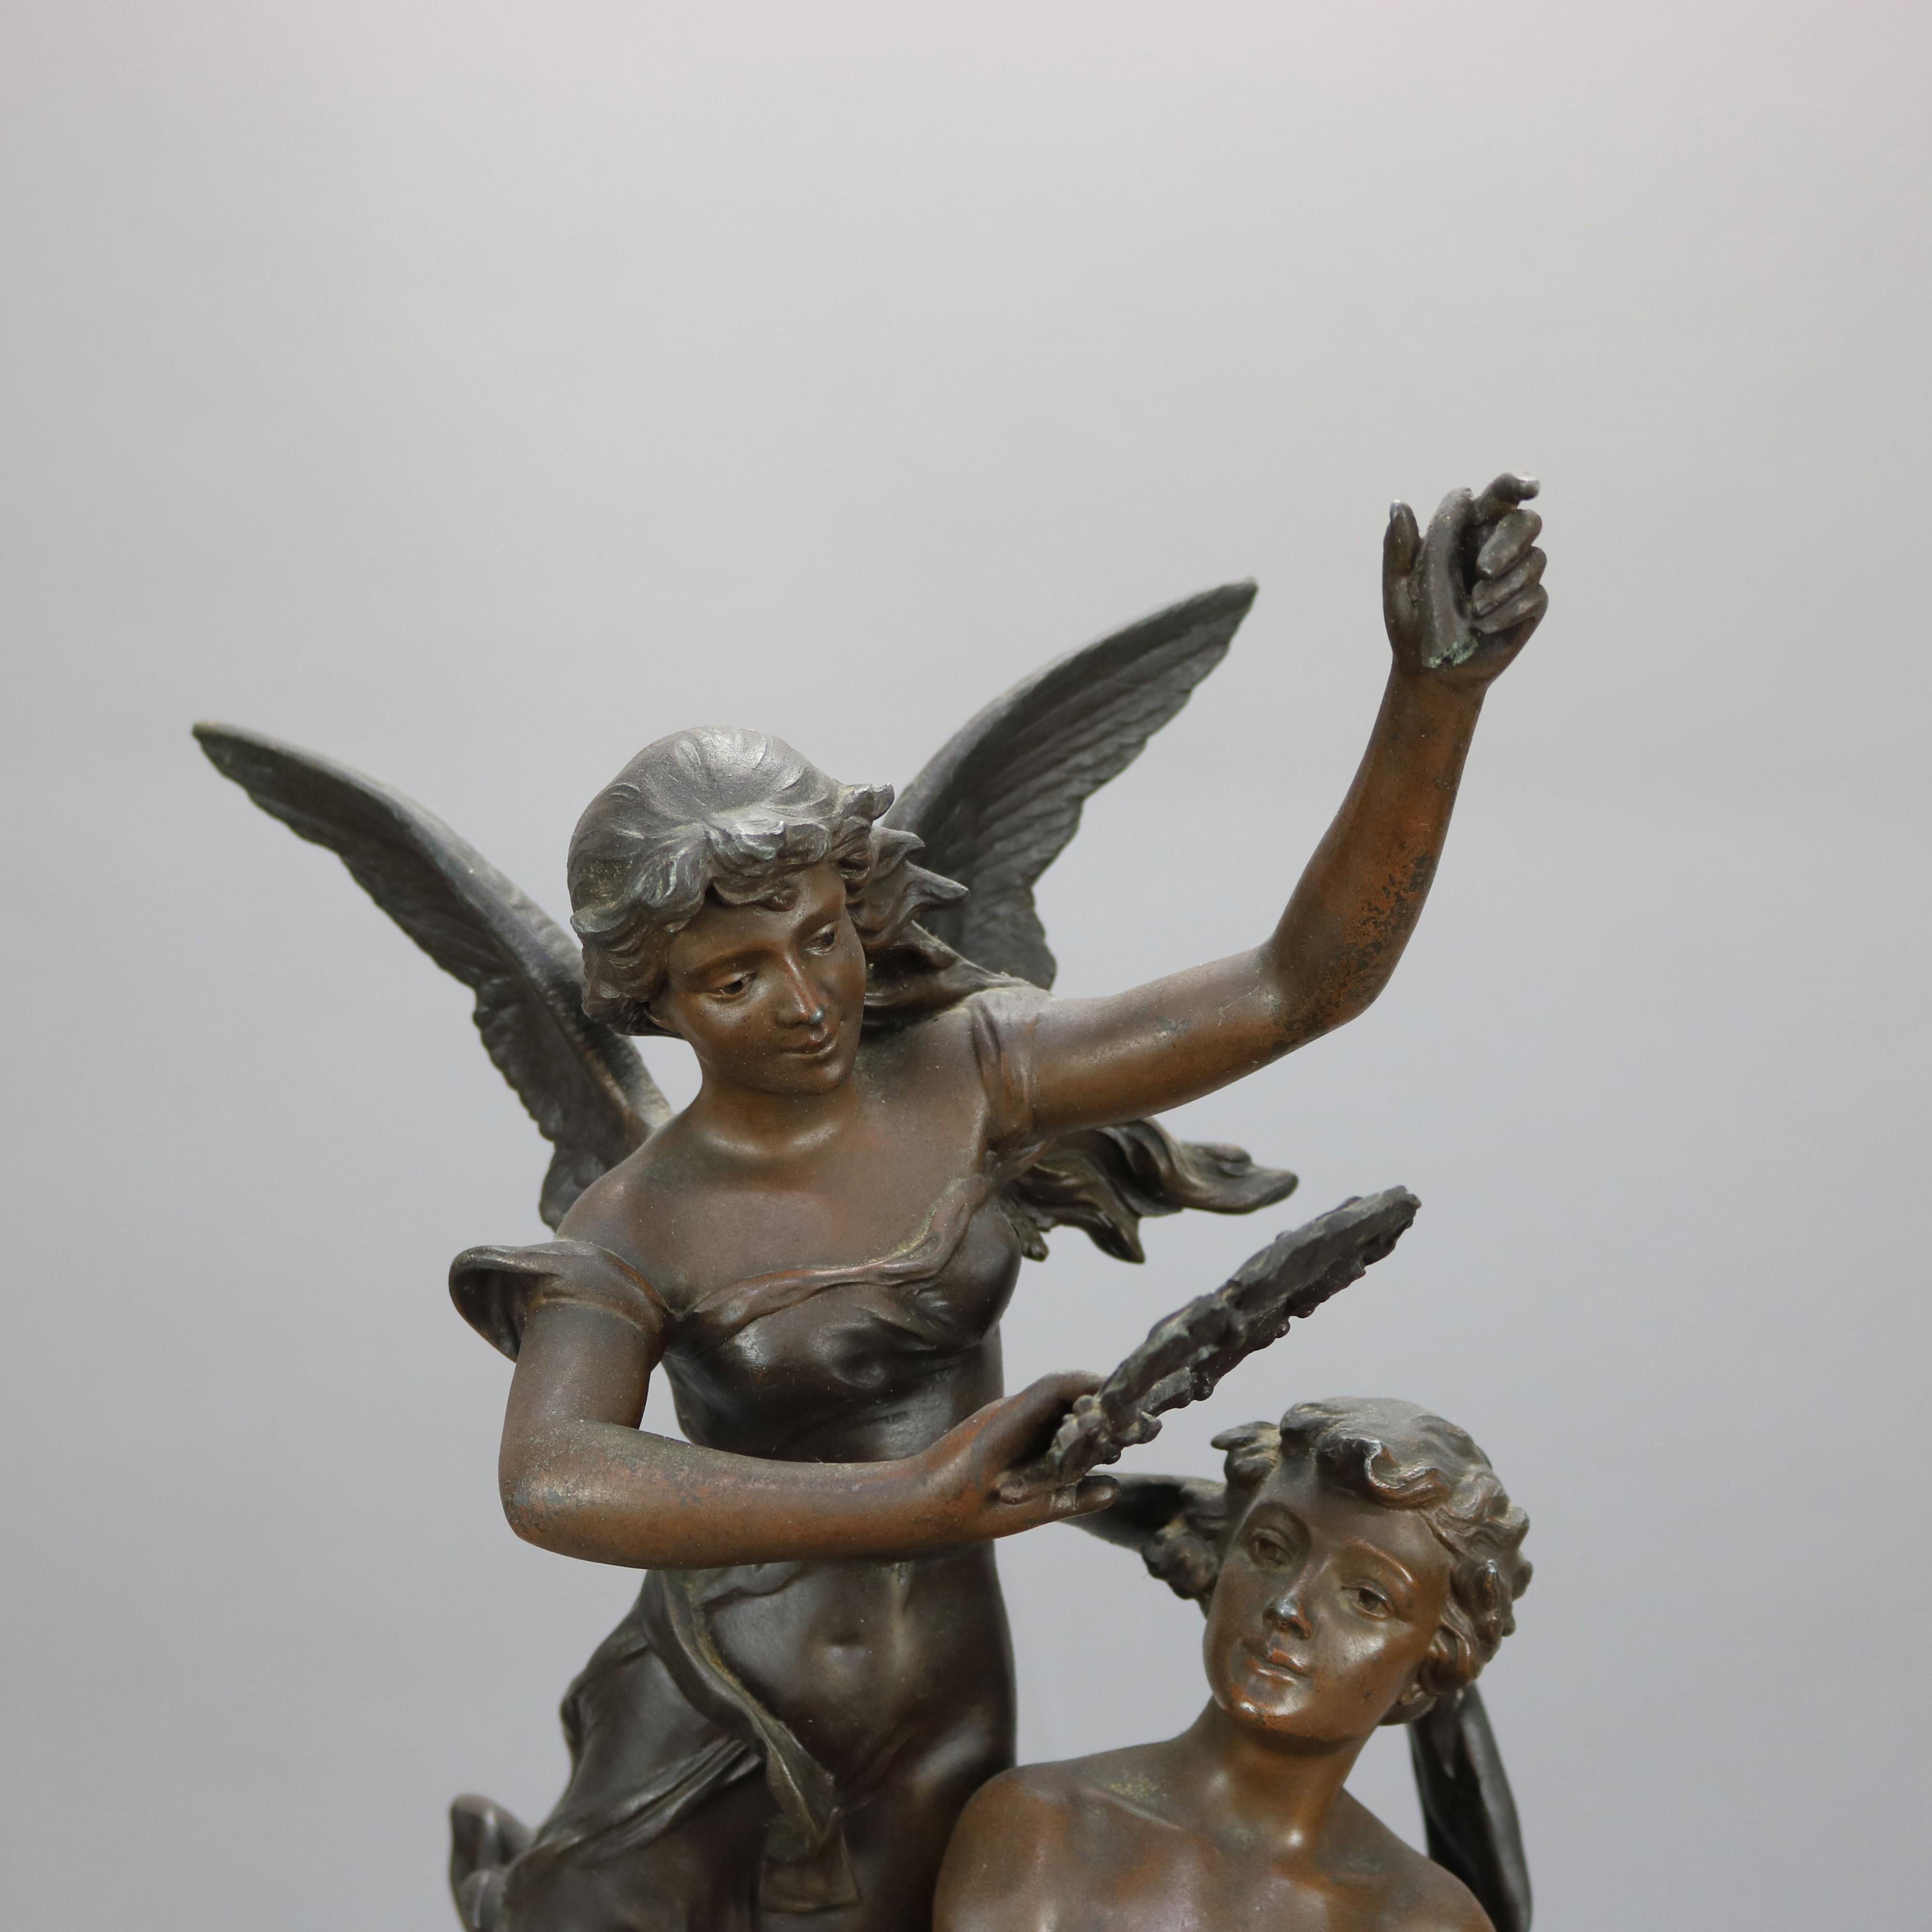 19th Century Antique French Kossowski Bronzed Metal Sculpture “Couronnement des Arts”, c1890